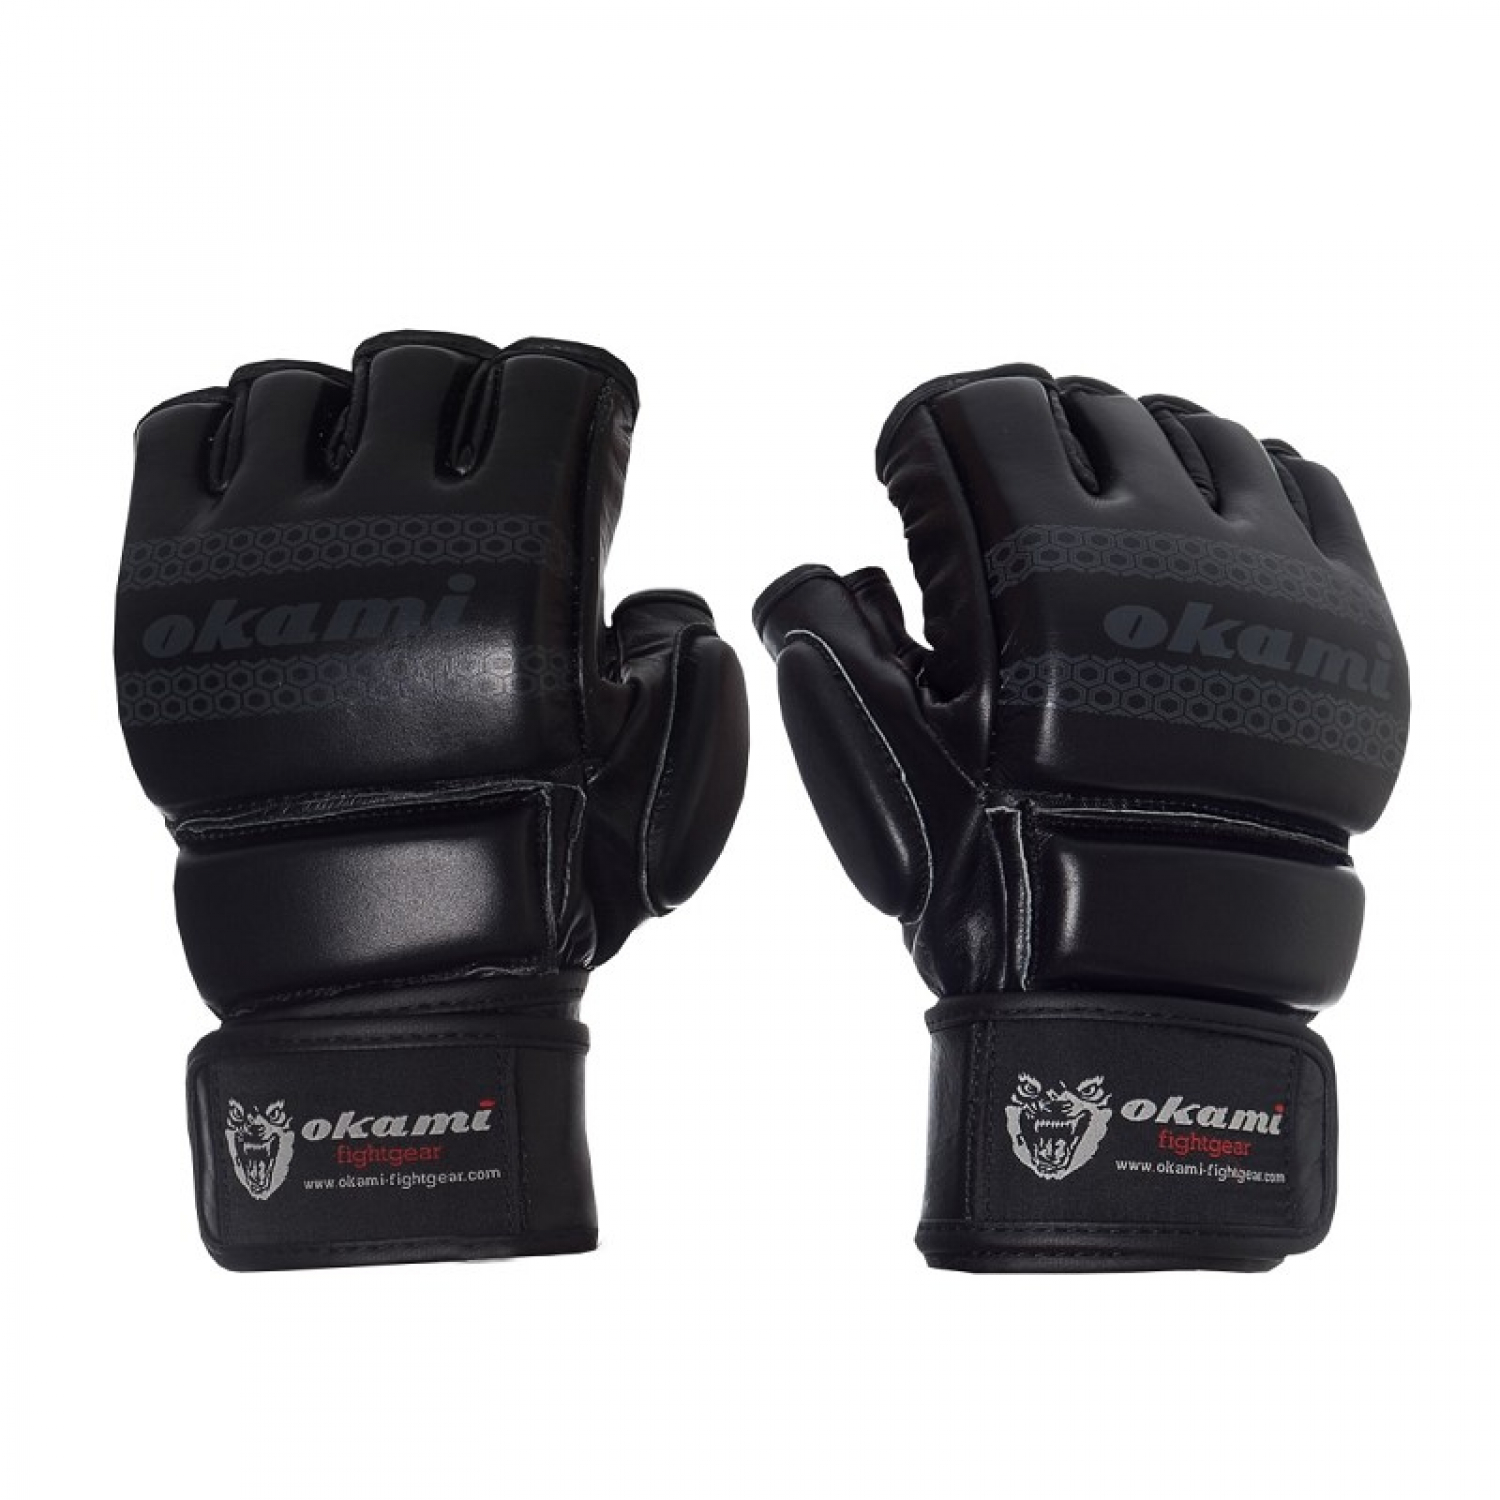 Okami fightgear MMA Gloves Hi Pro Black Edition